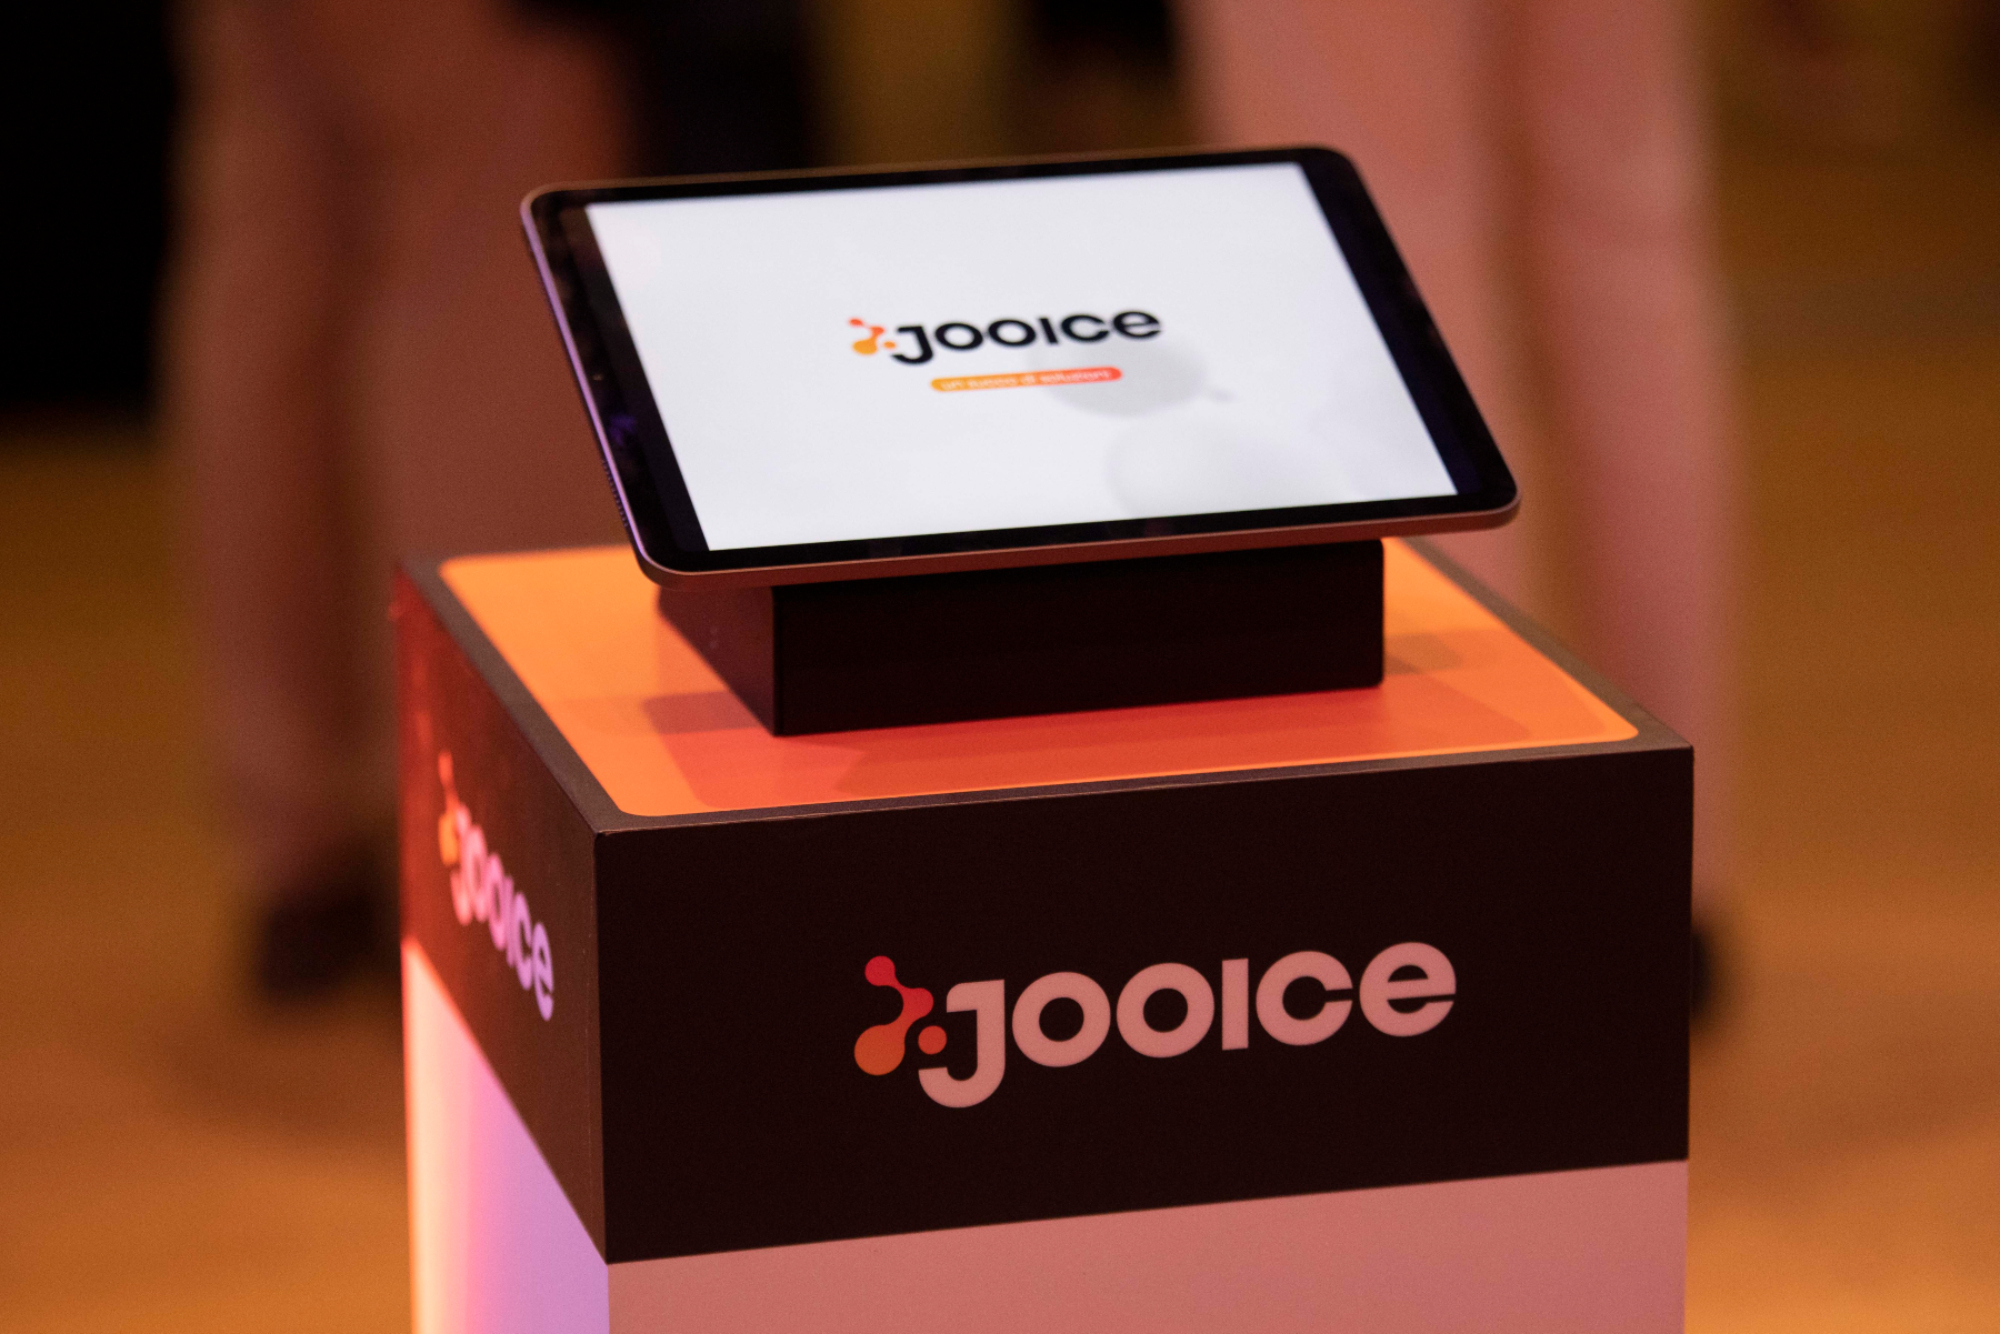 jooice app